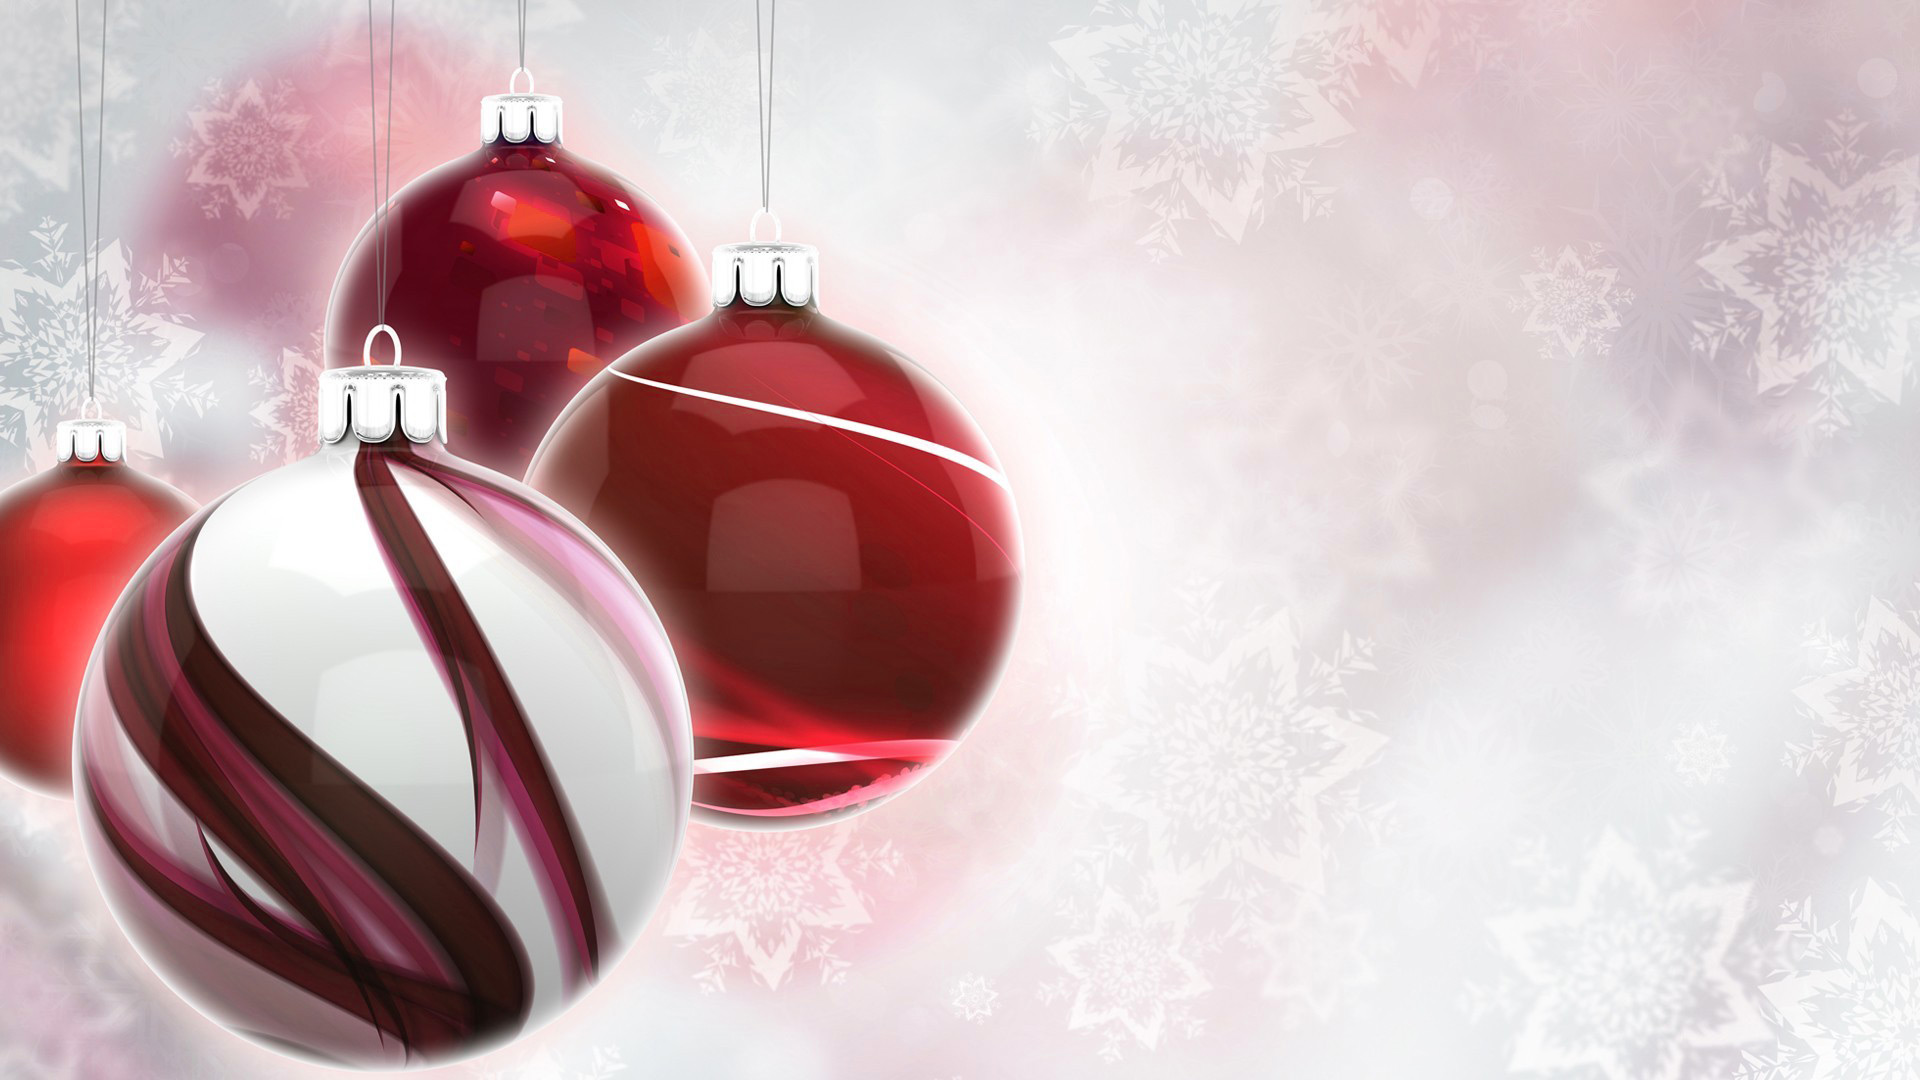 White_Christmas_Background_with_Christmas_Balls.jpg?m=1399676400